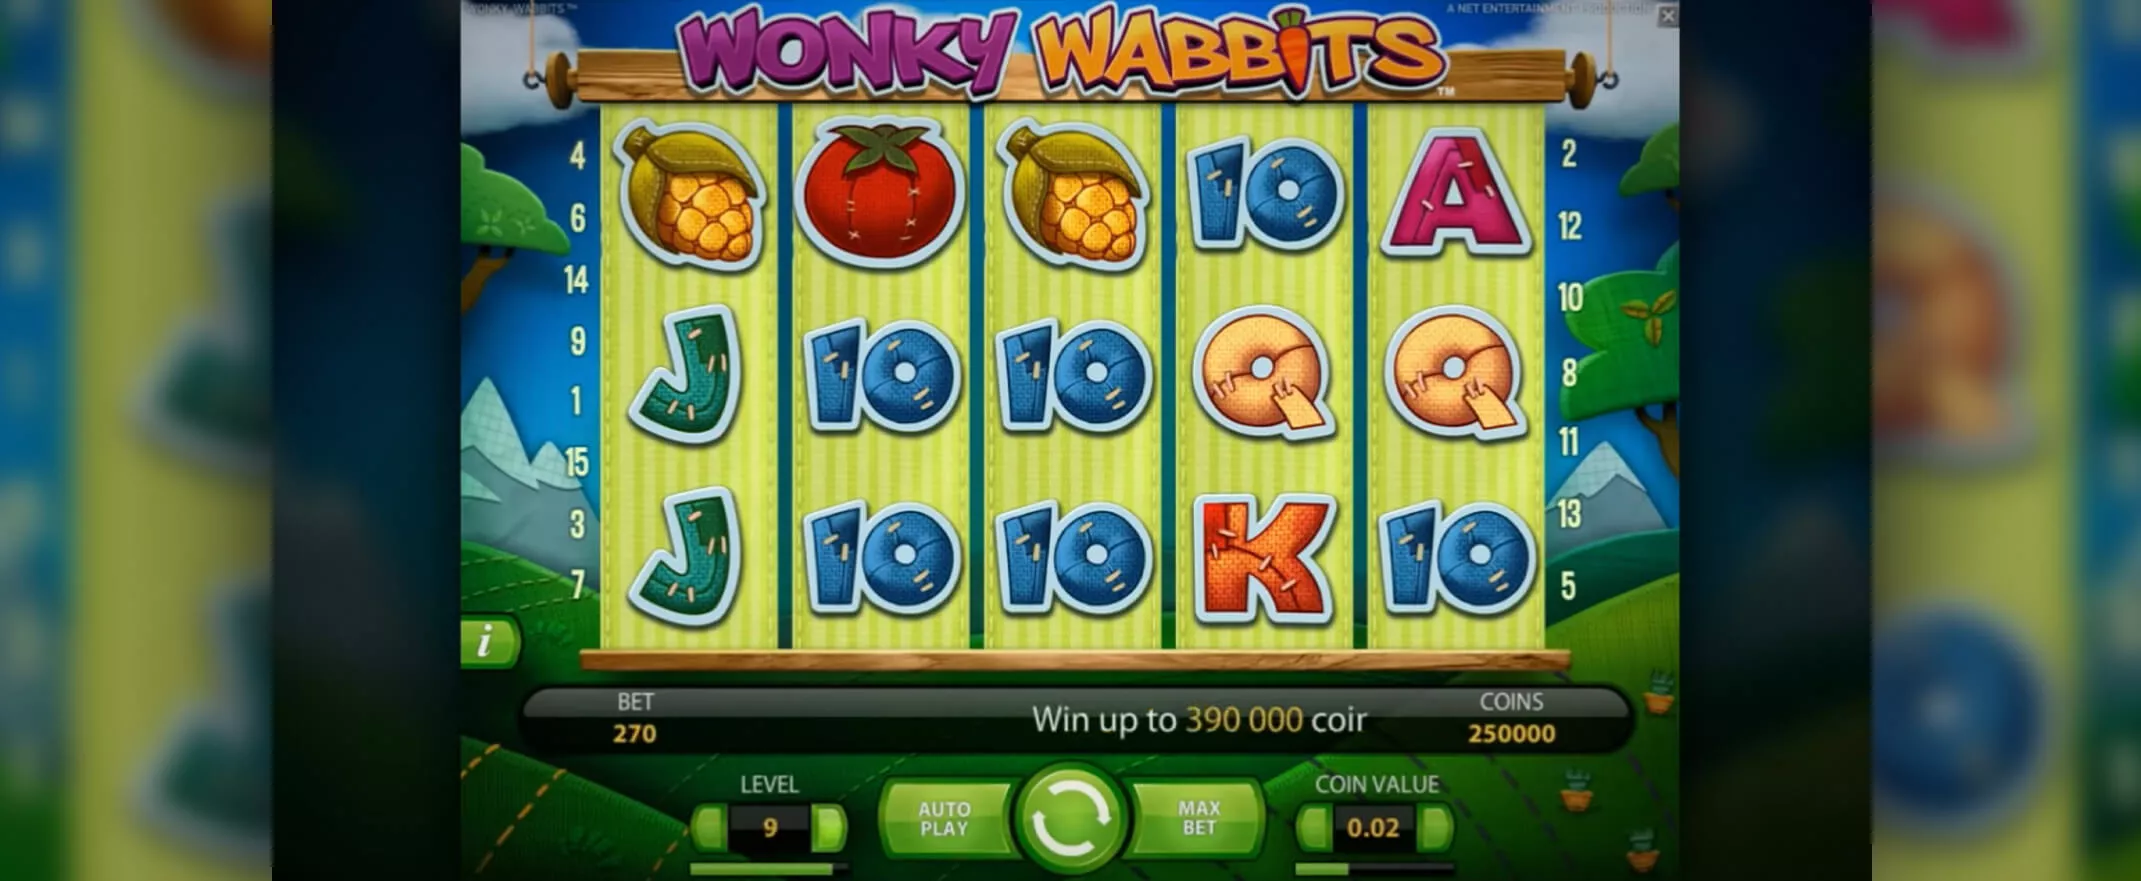 Wonky Wabbits spielautomat